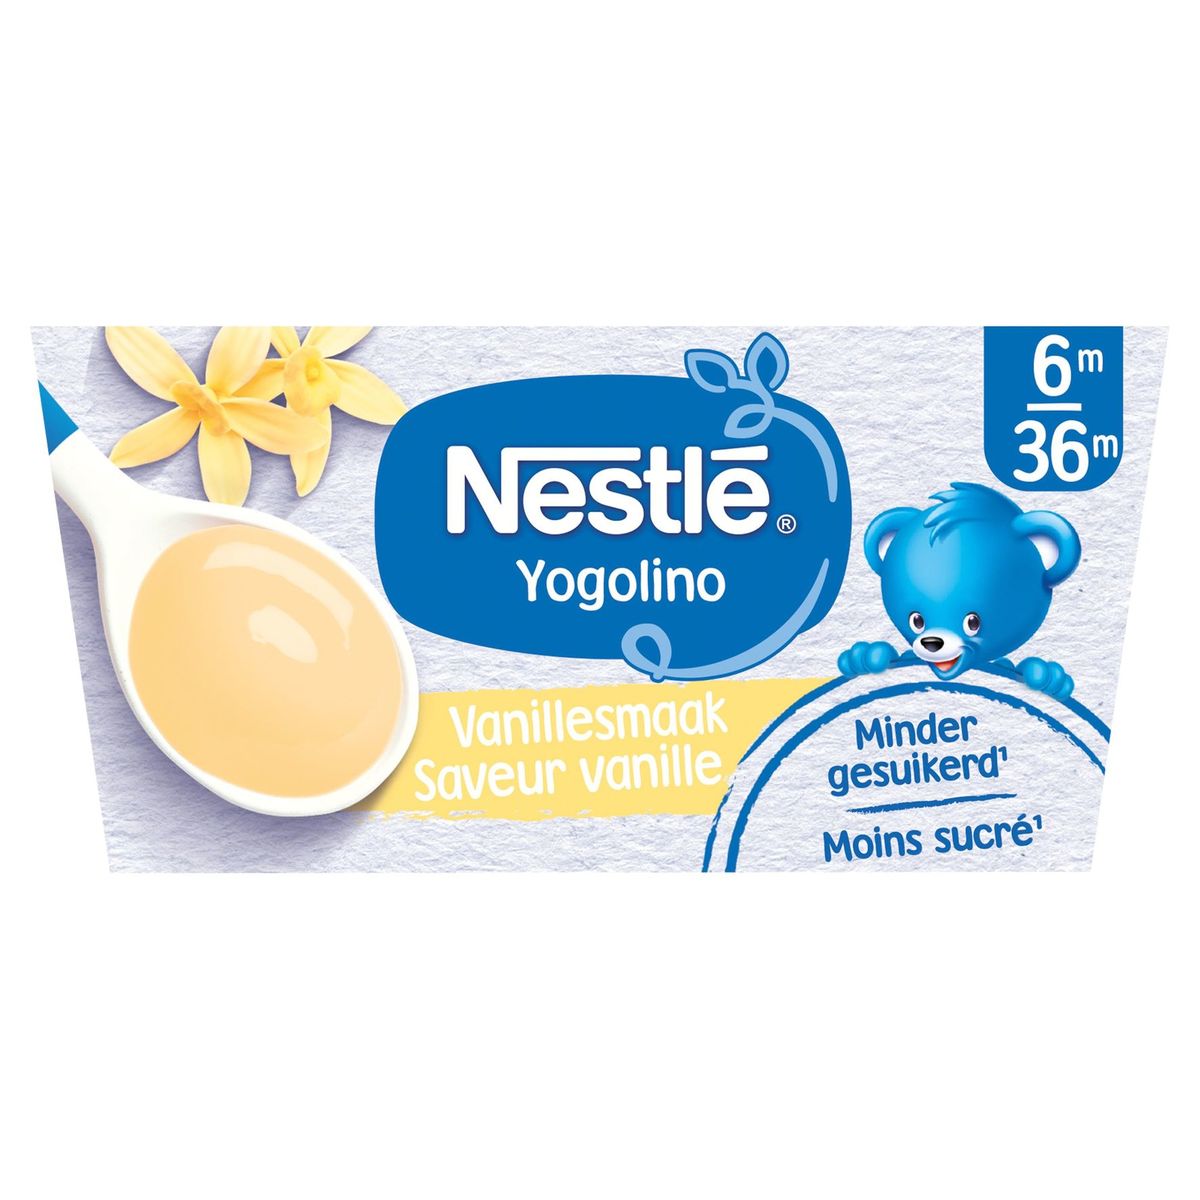 Nestlé Yogolino Melkdessert Vanillesmaak vanaf 6 maanden 4x100g